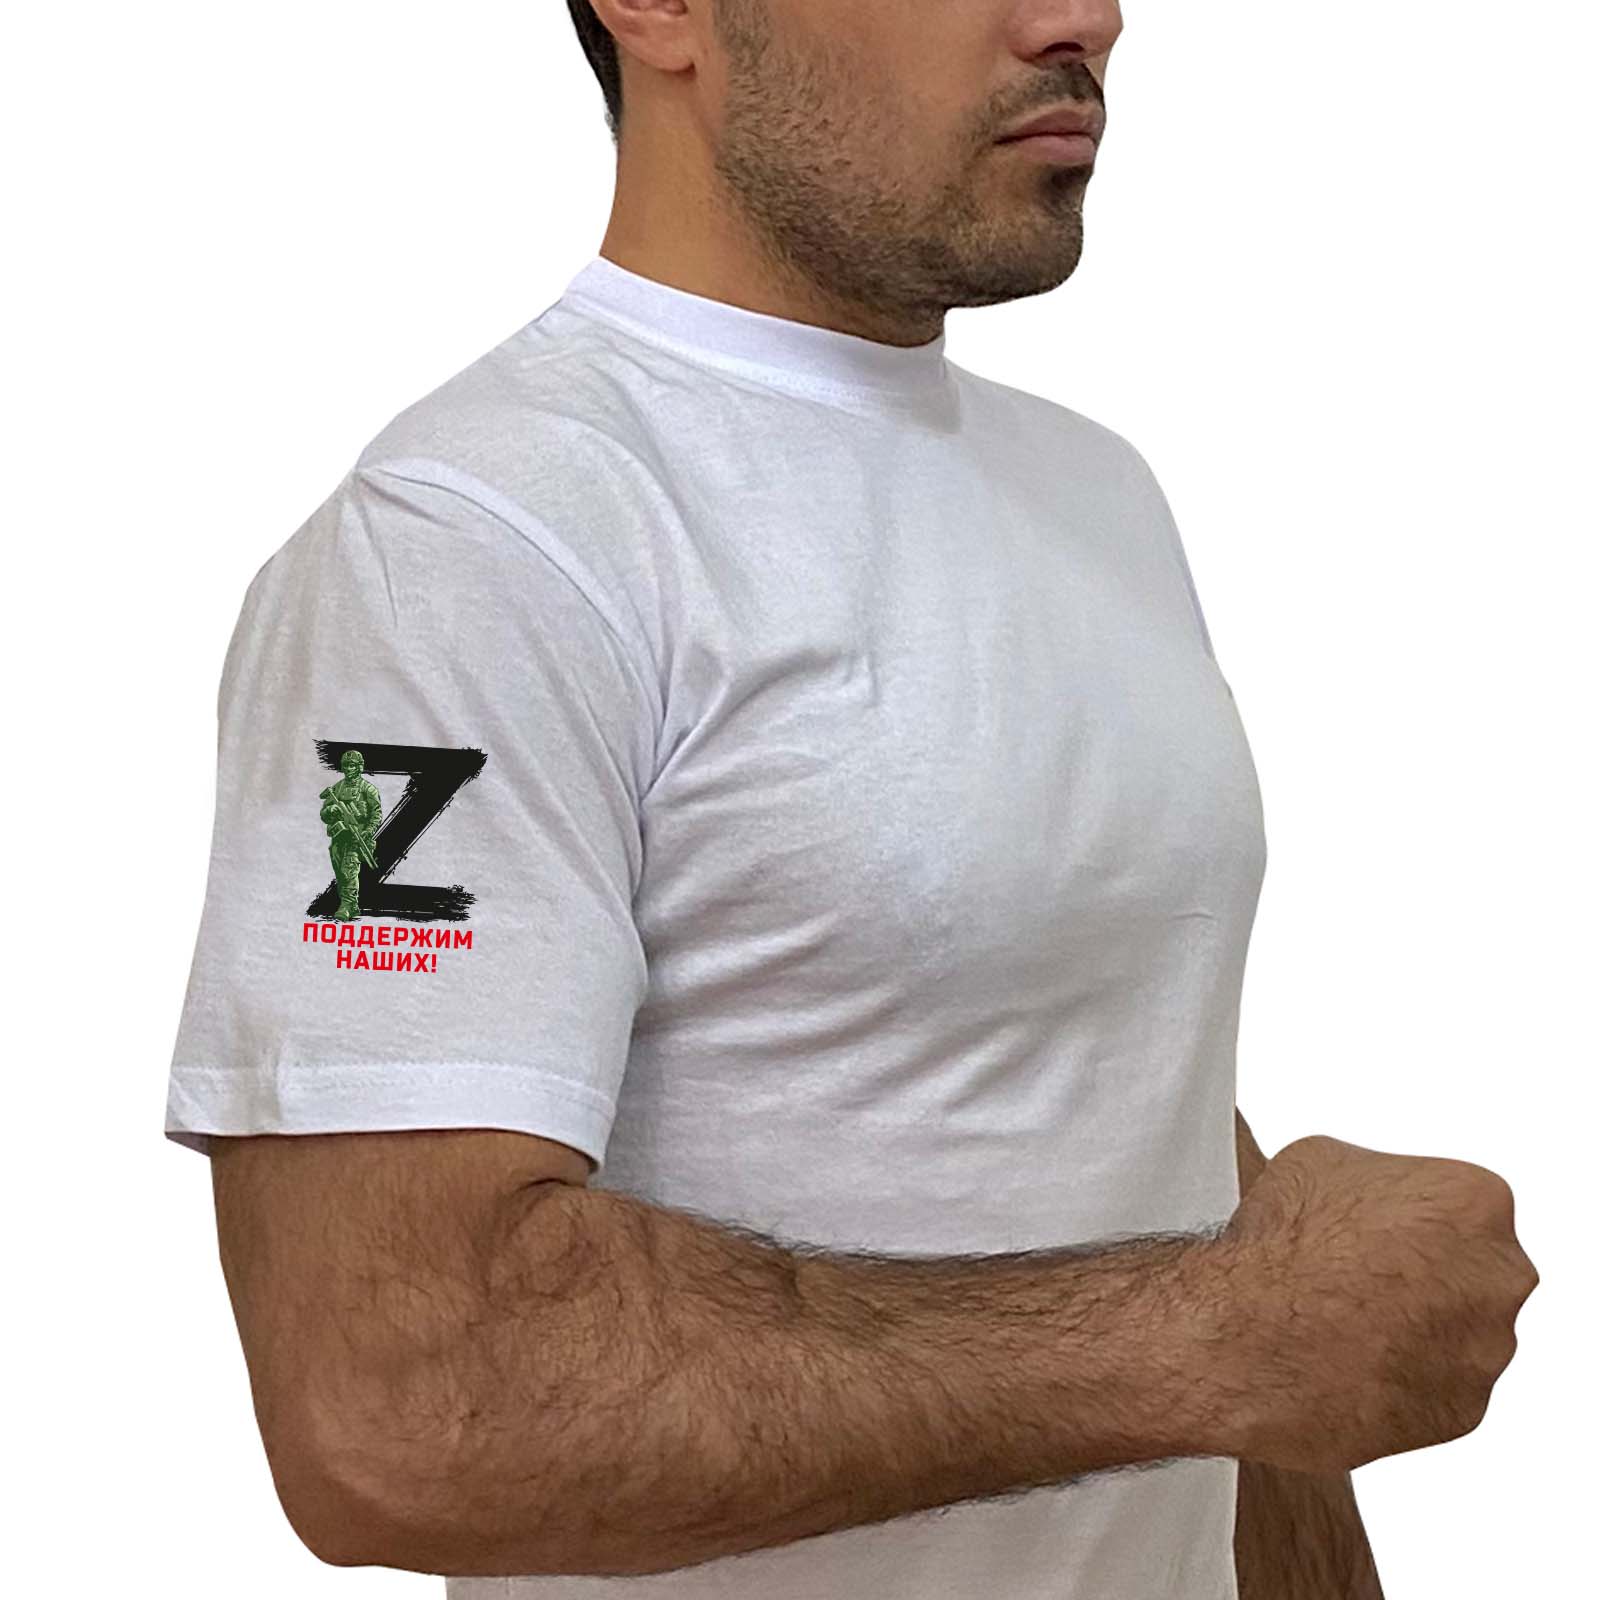 Купить белую футболку Z с авторским трансфером на рукаве